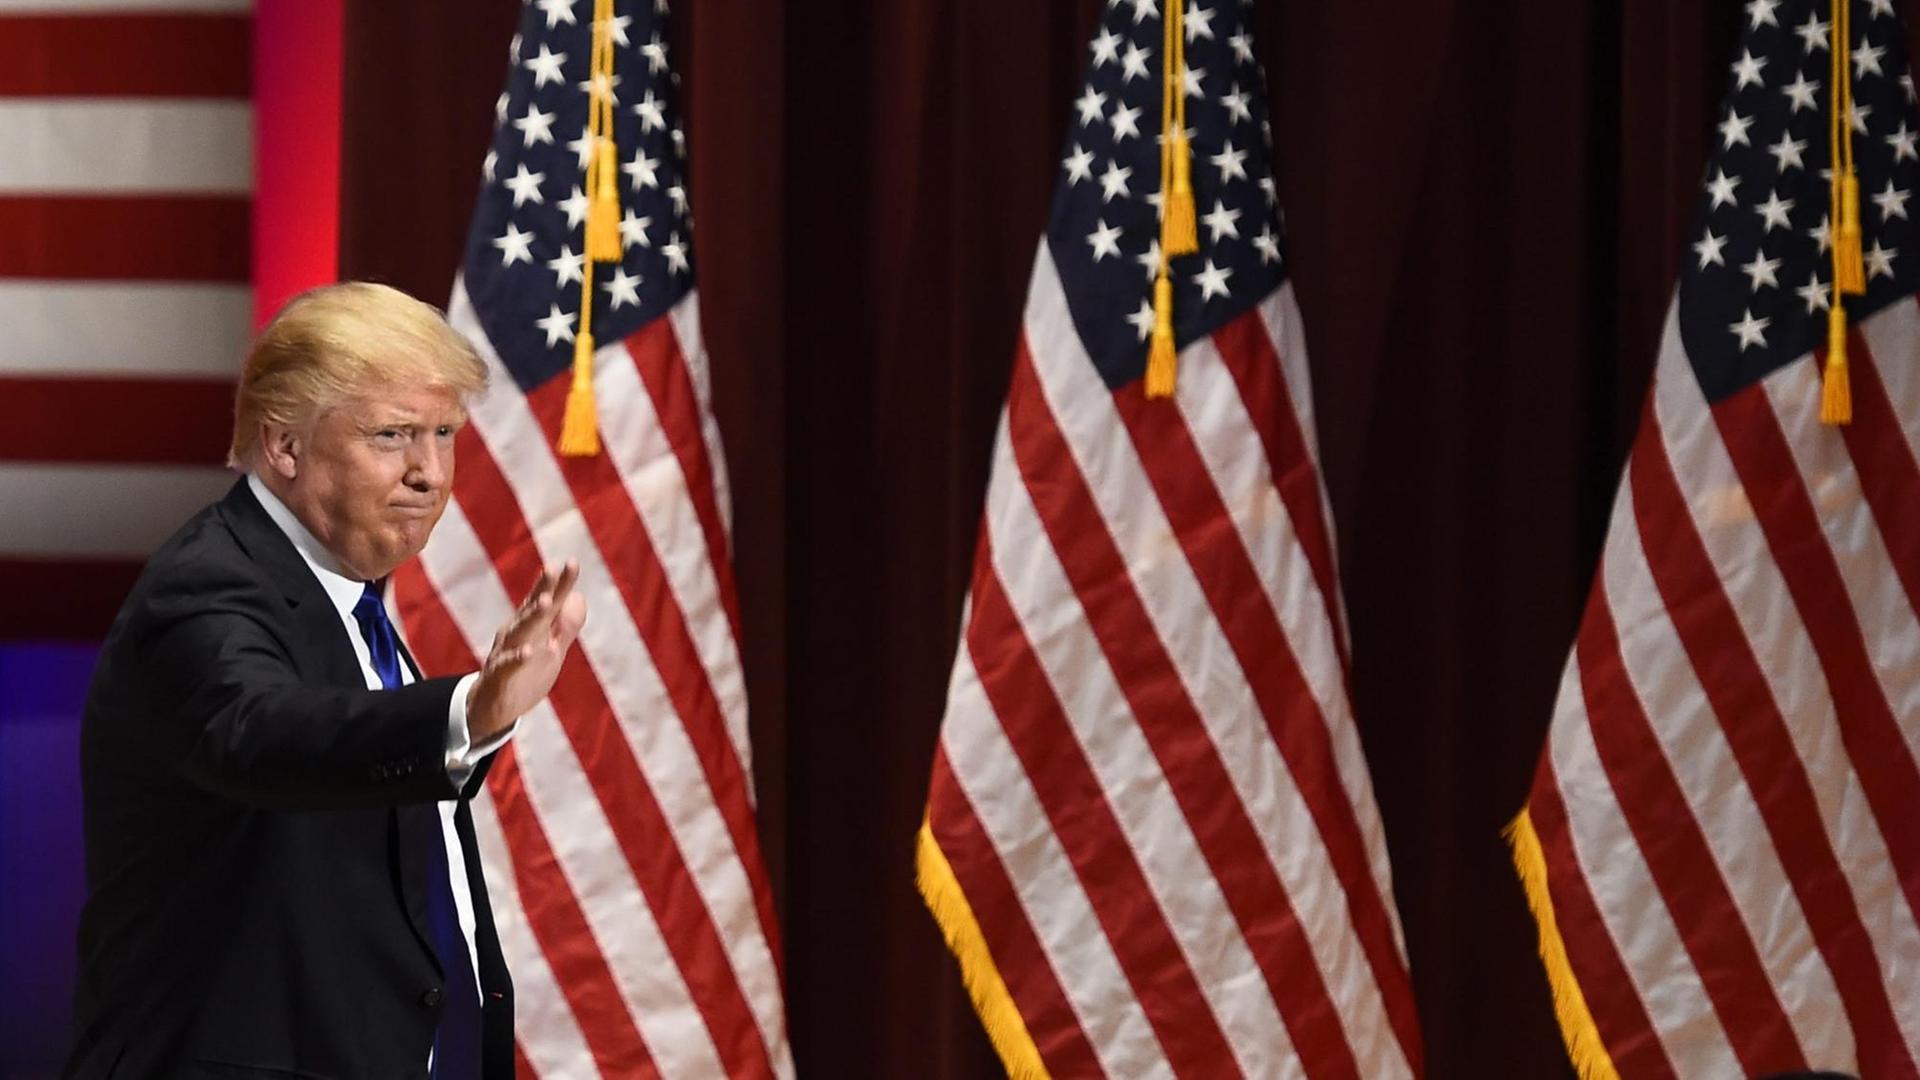 Donald Trump vor den "Stars and Stripes" der US-Fahne